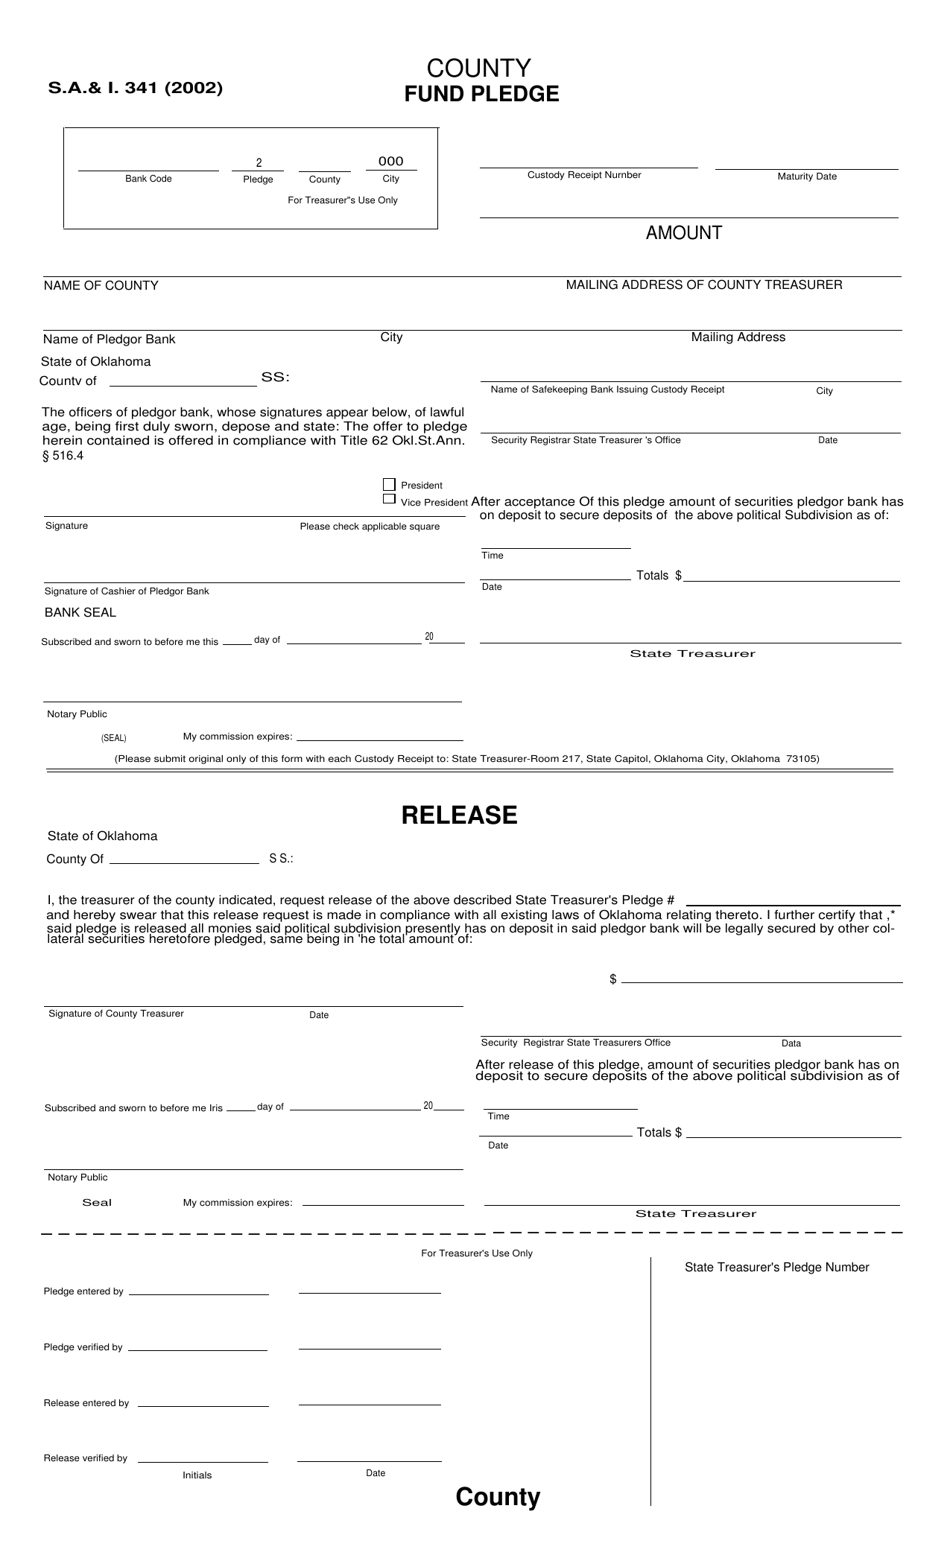 Form S.A. I.341 County Fund Pledge - Oklahoma, Page 1